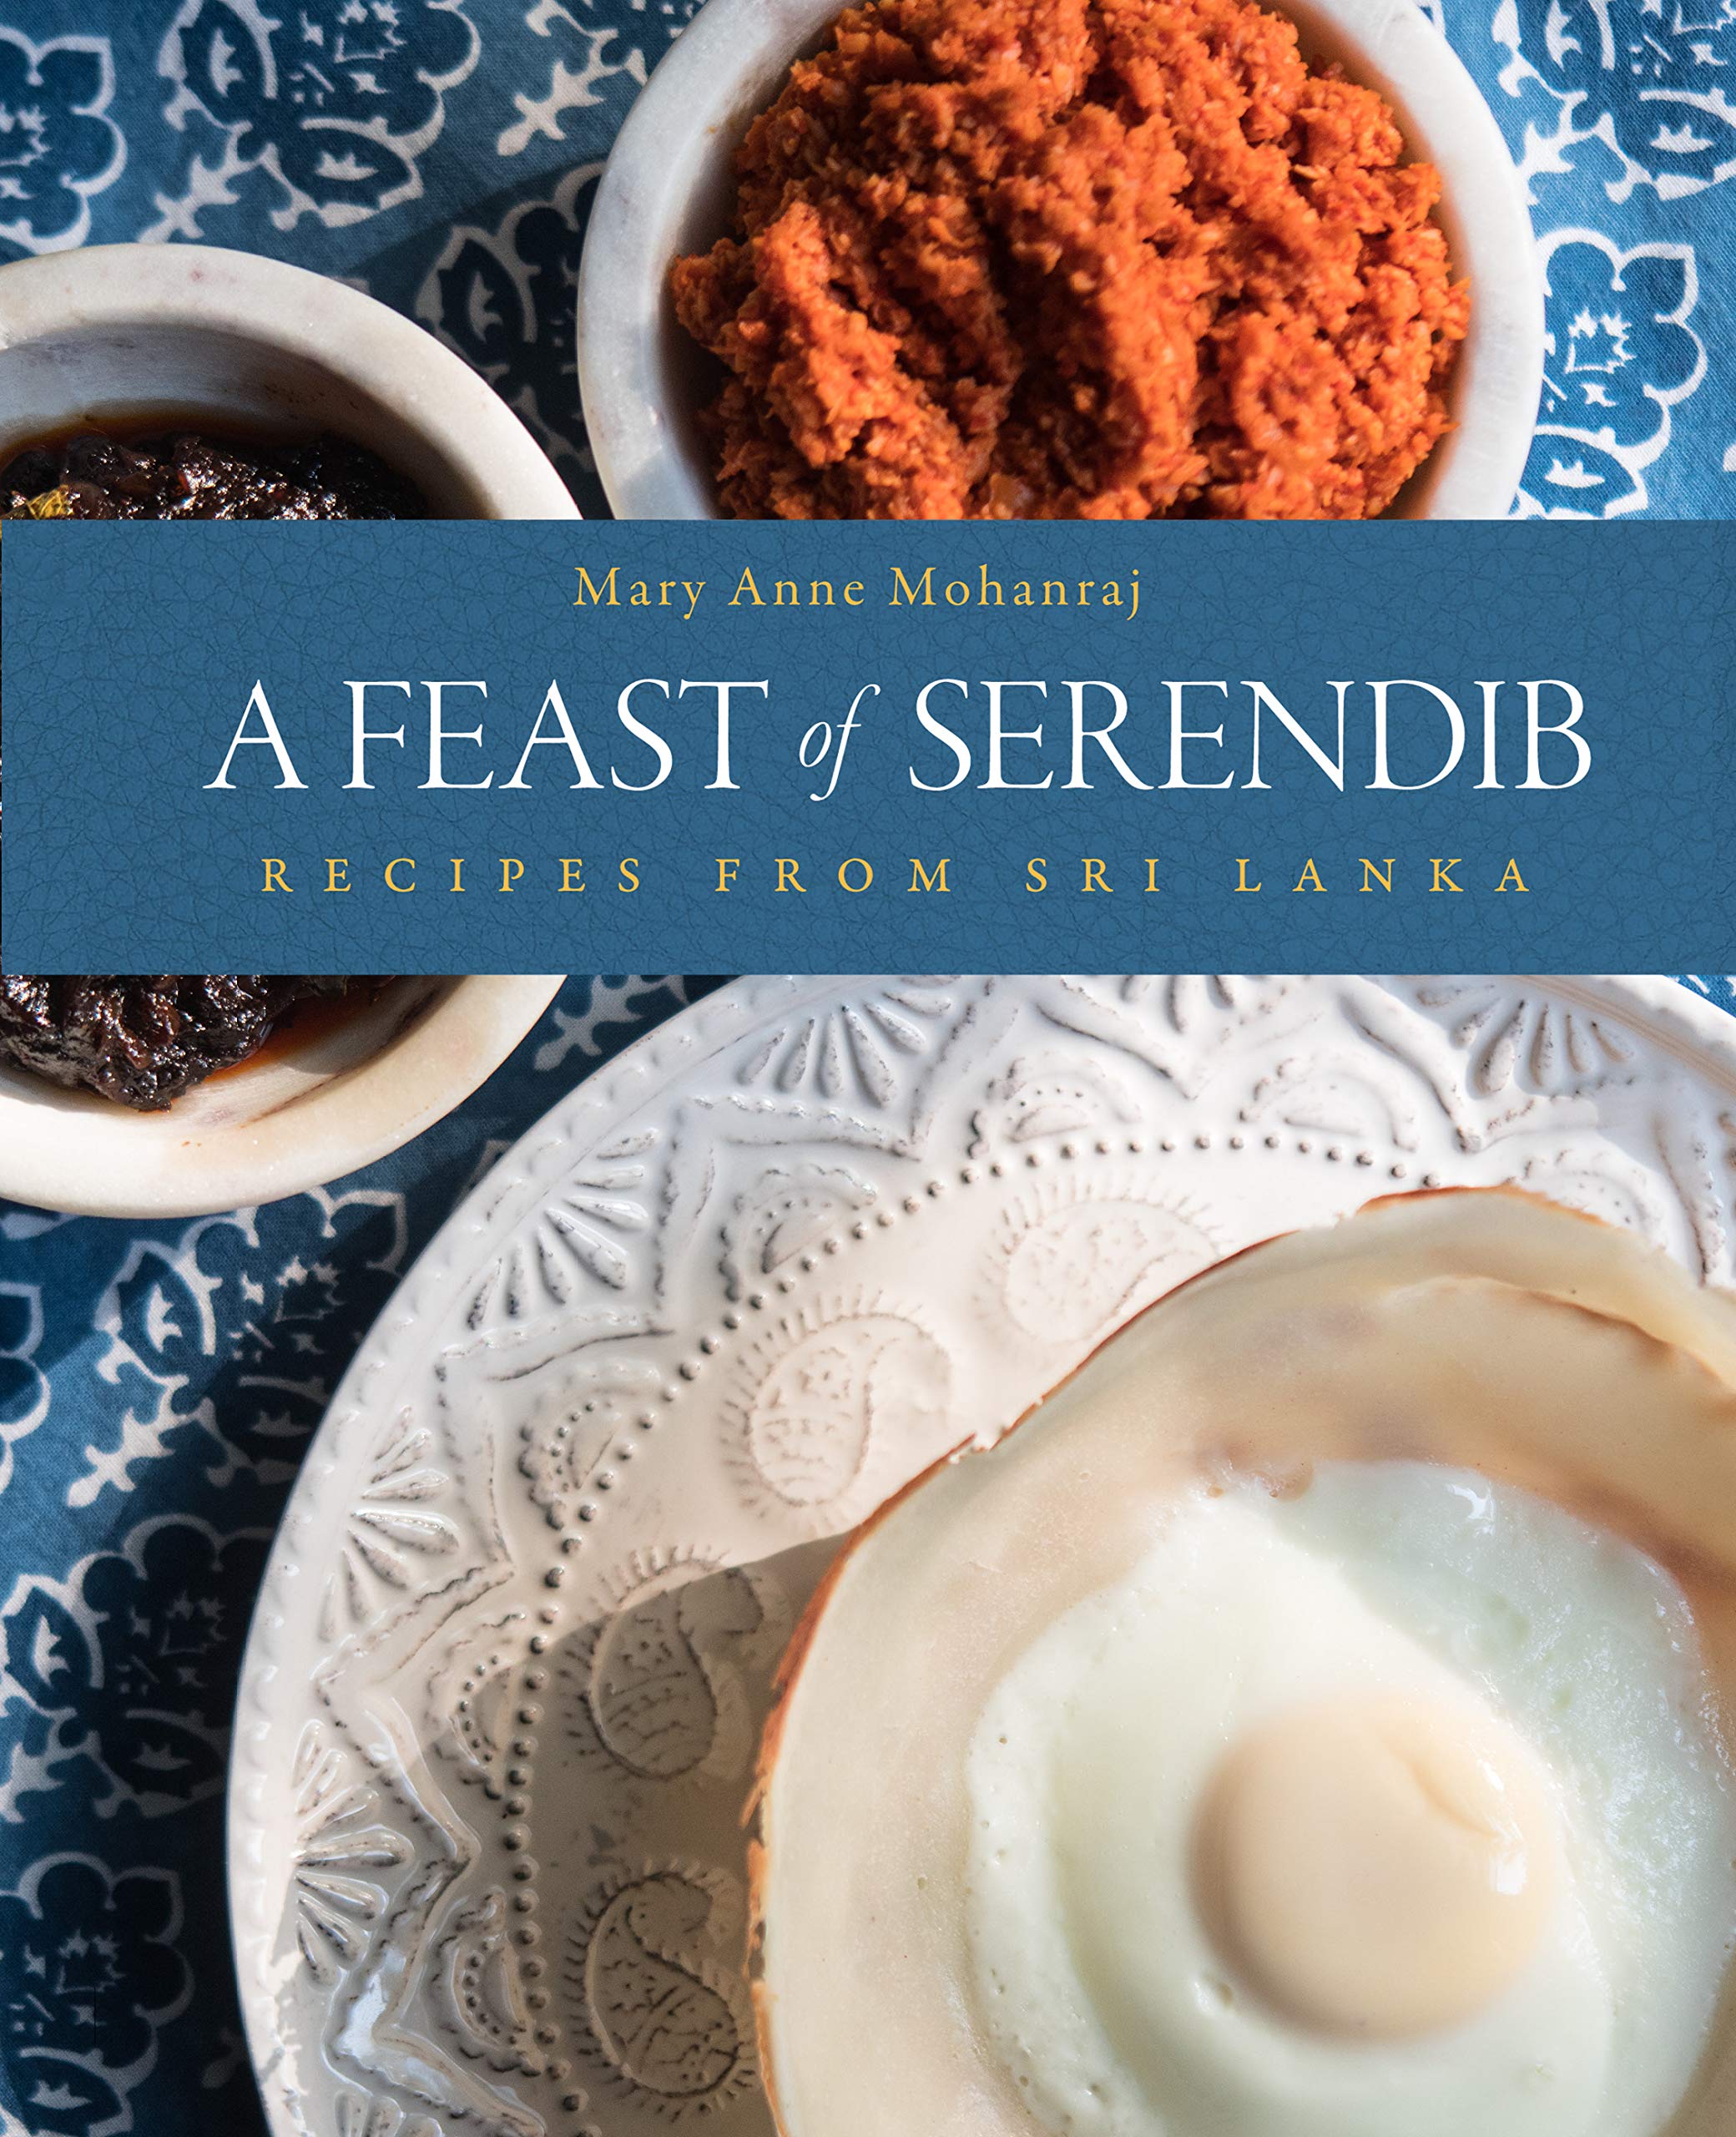 A Feast of Serendib (Mary Anne Mohanraj)